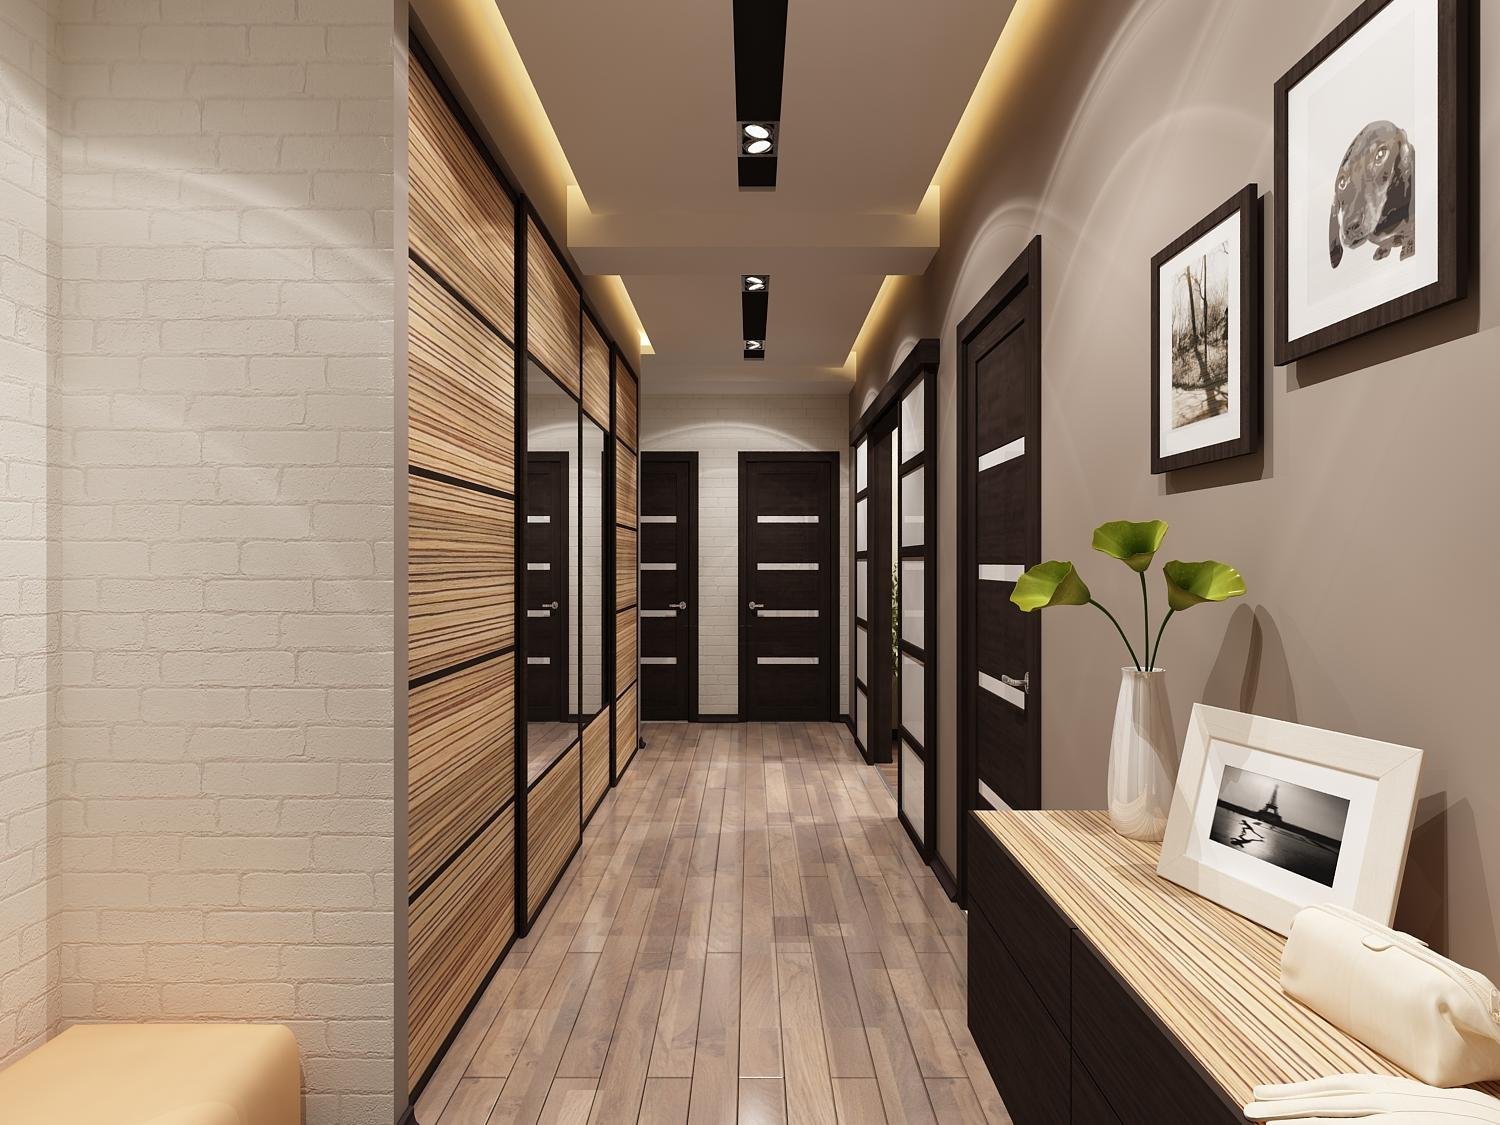 Дизайн длинного узкого коридора в квартире - 68 фото